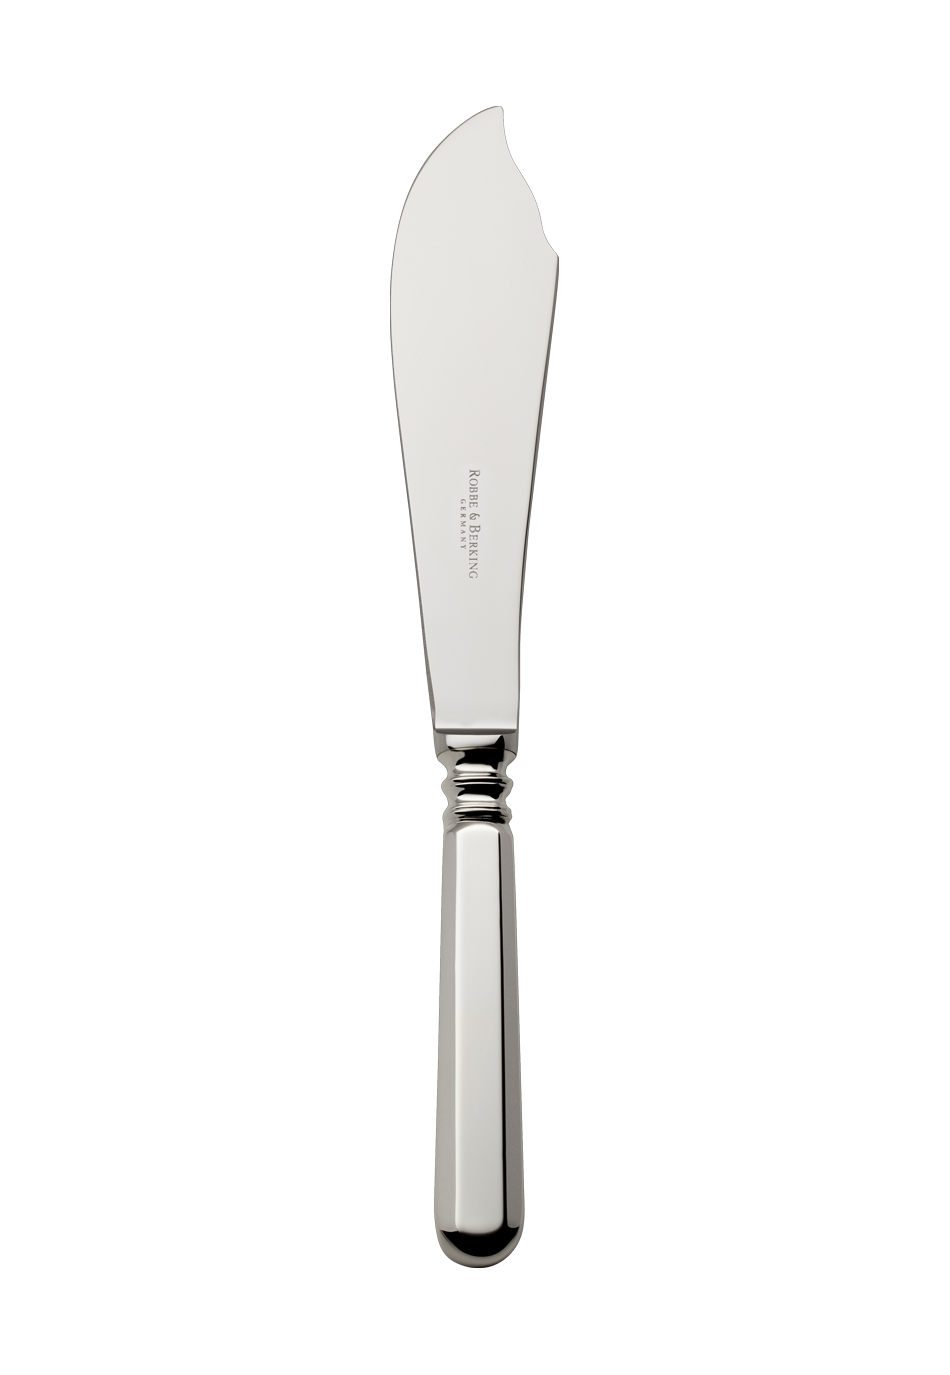 Alt-Spaten Tart Knife (150g massive silverplated)